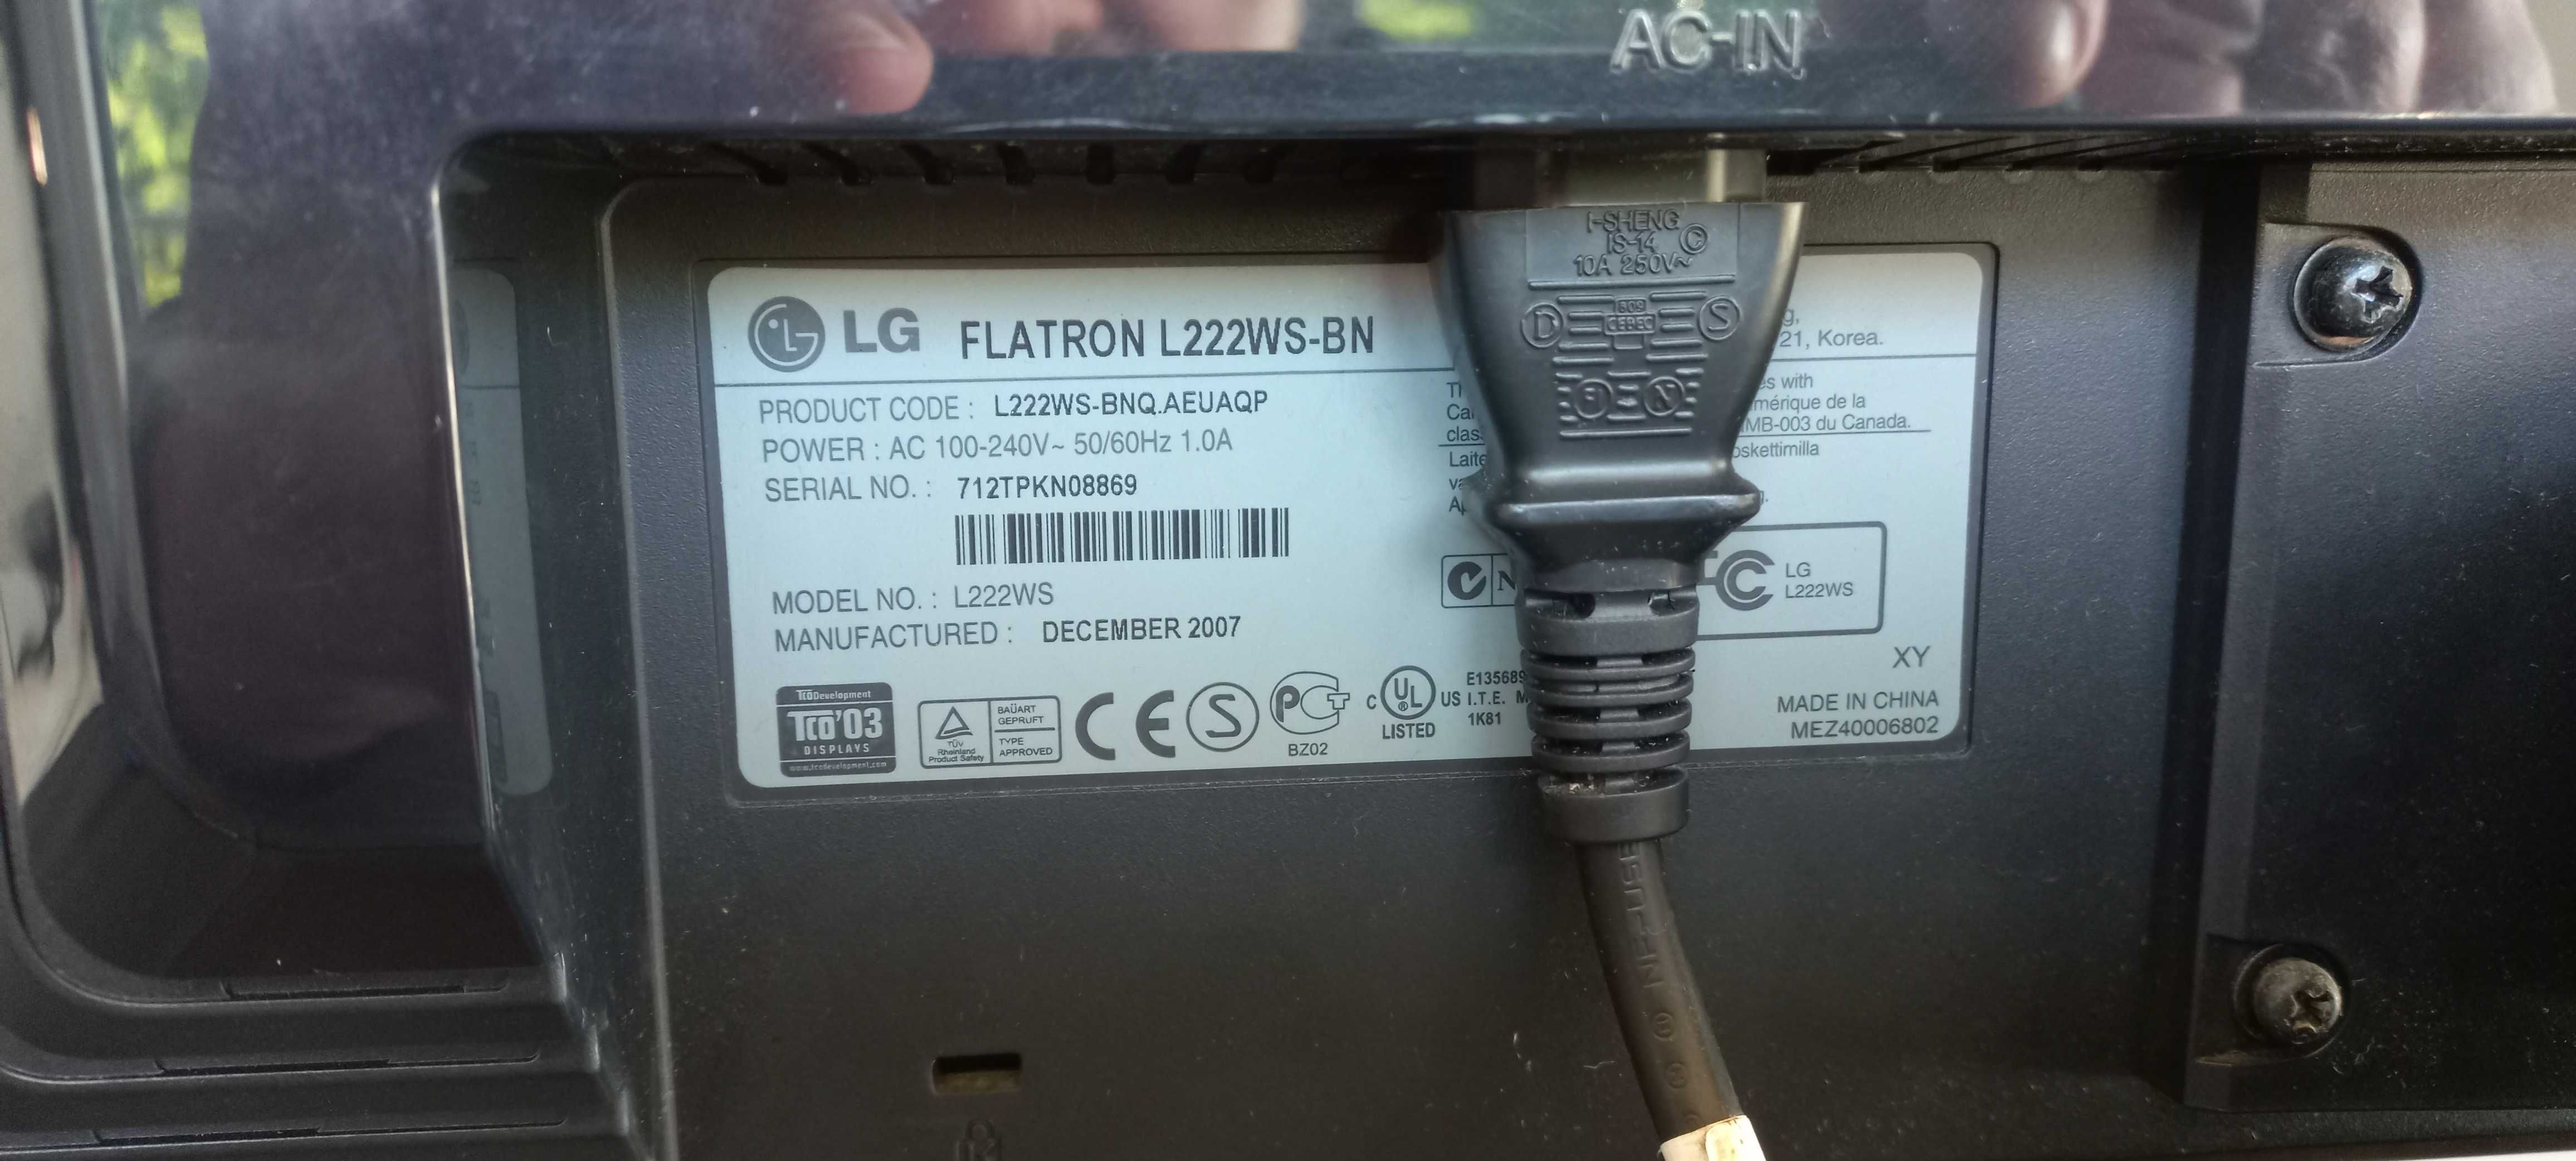 monitor LG flatron L222WS-BN 22"